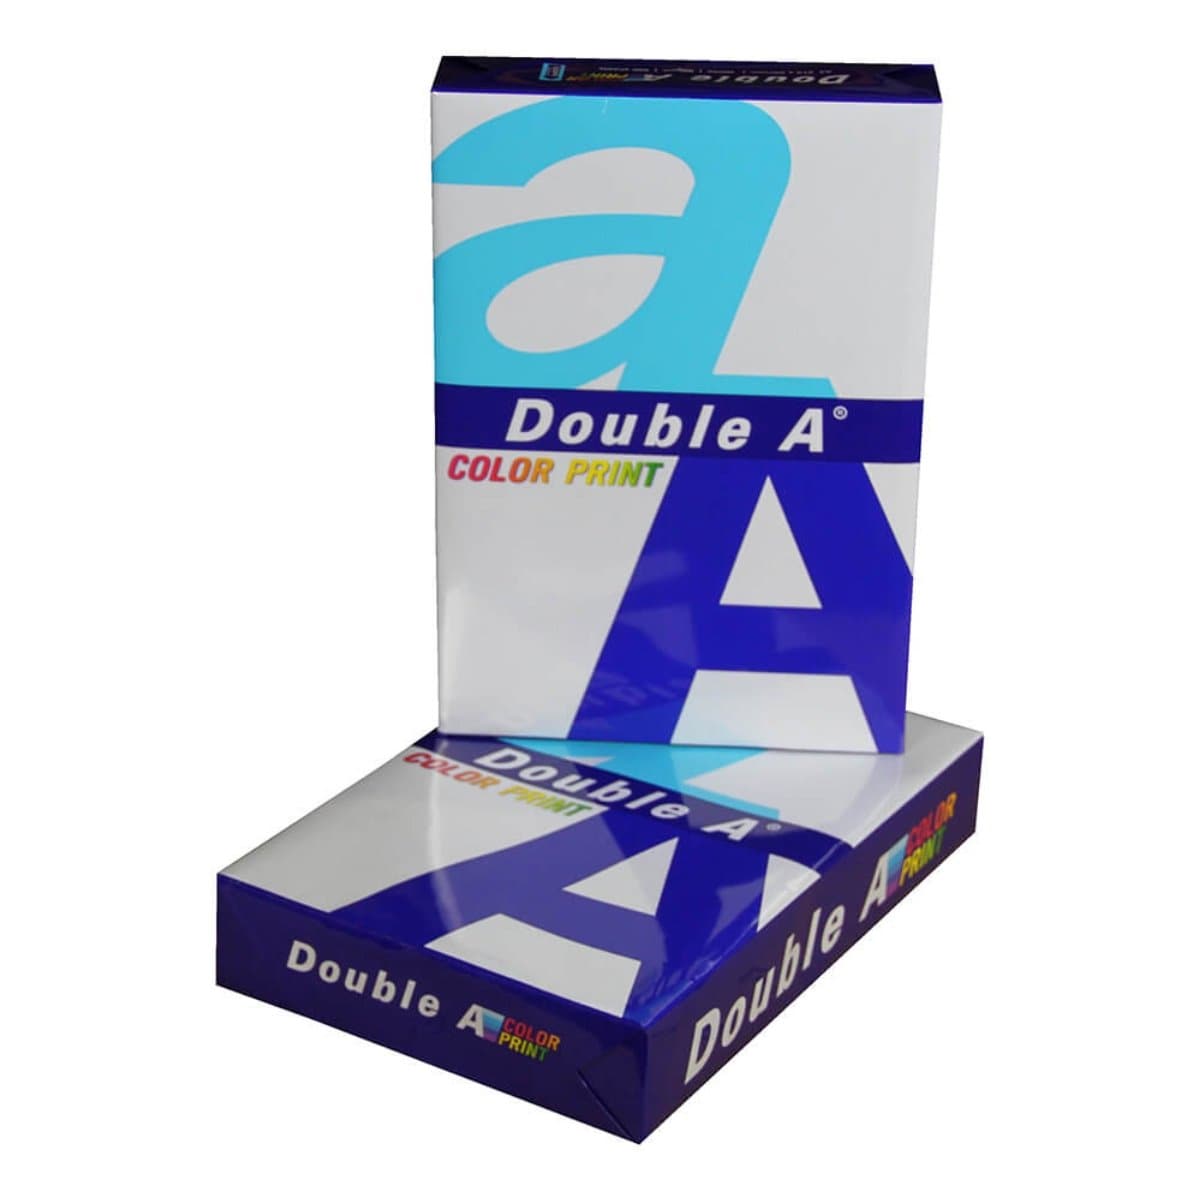 Double A Color Print Premium Paper A4, 90gsm, 500sheets/ream, White